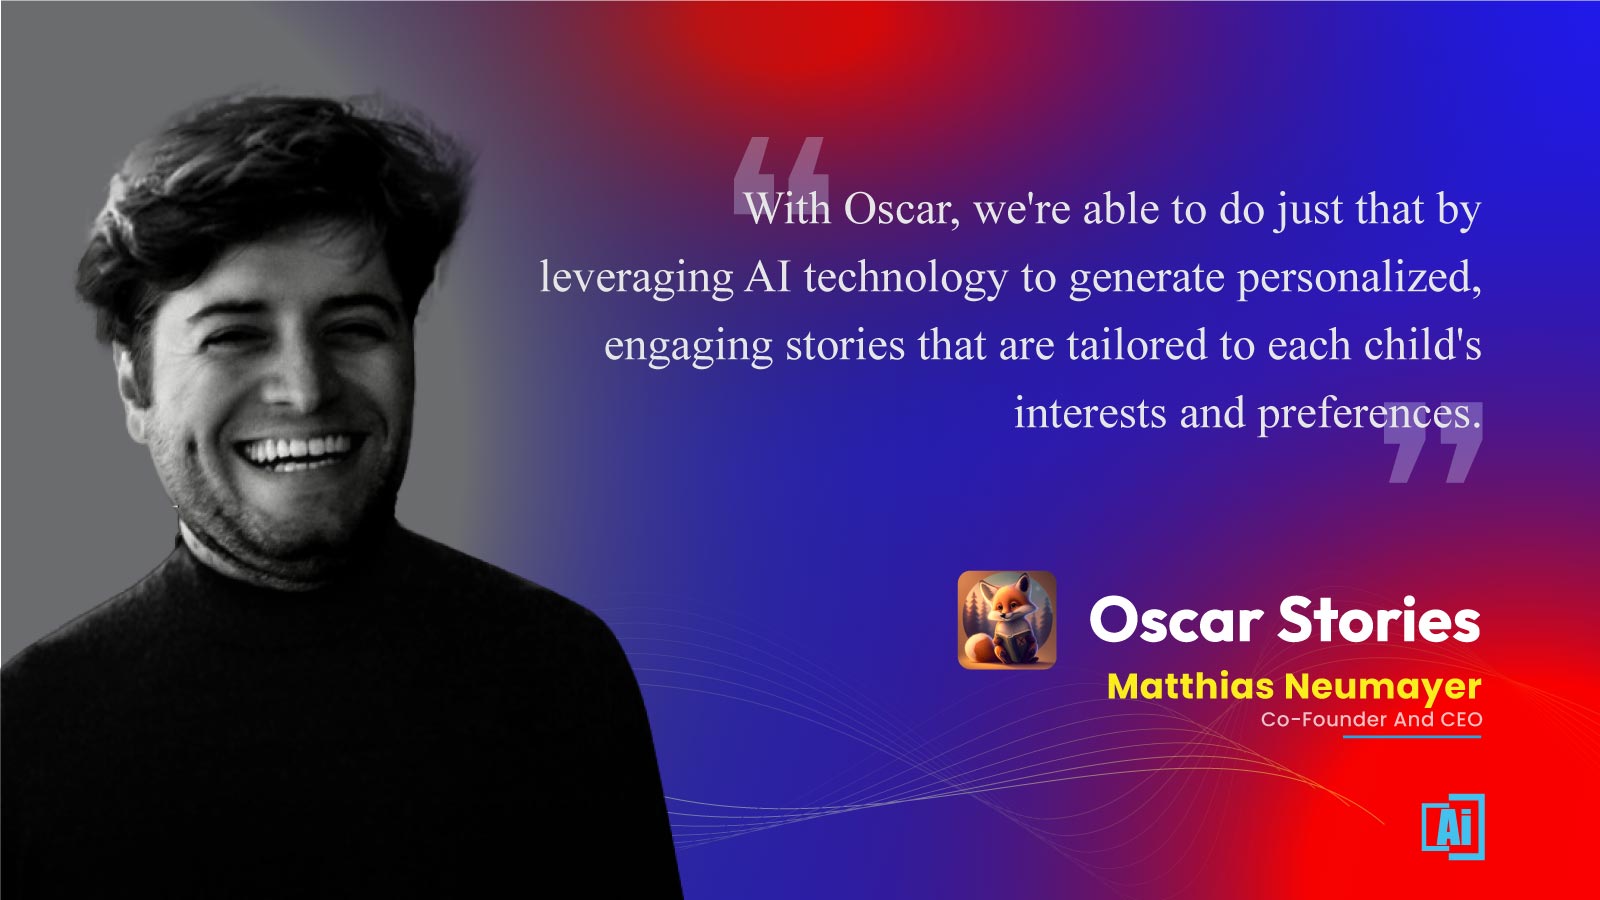 Matthias Neumayer, Co-Founder & CEO at Oscar Stories